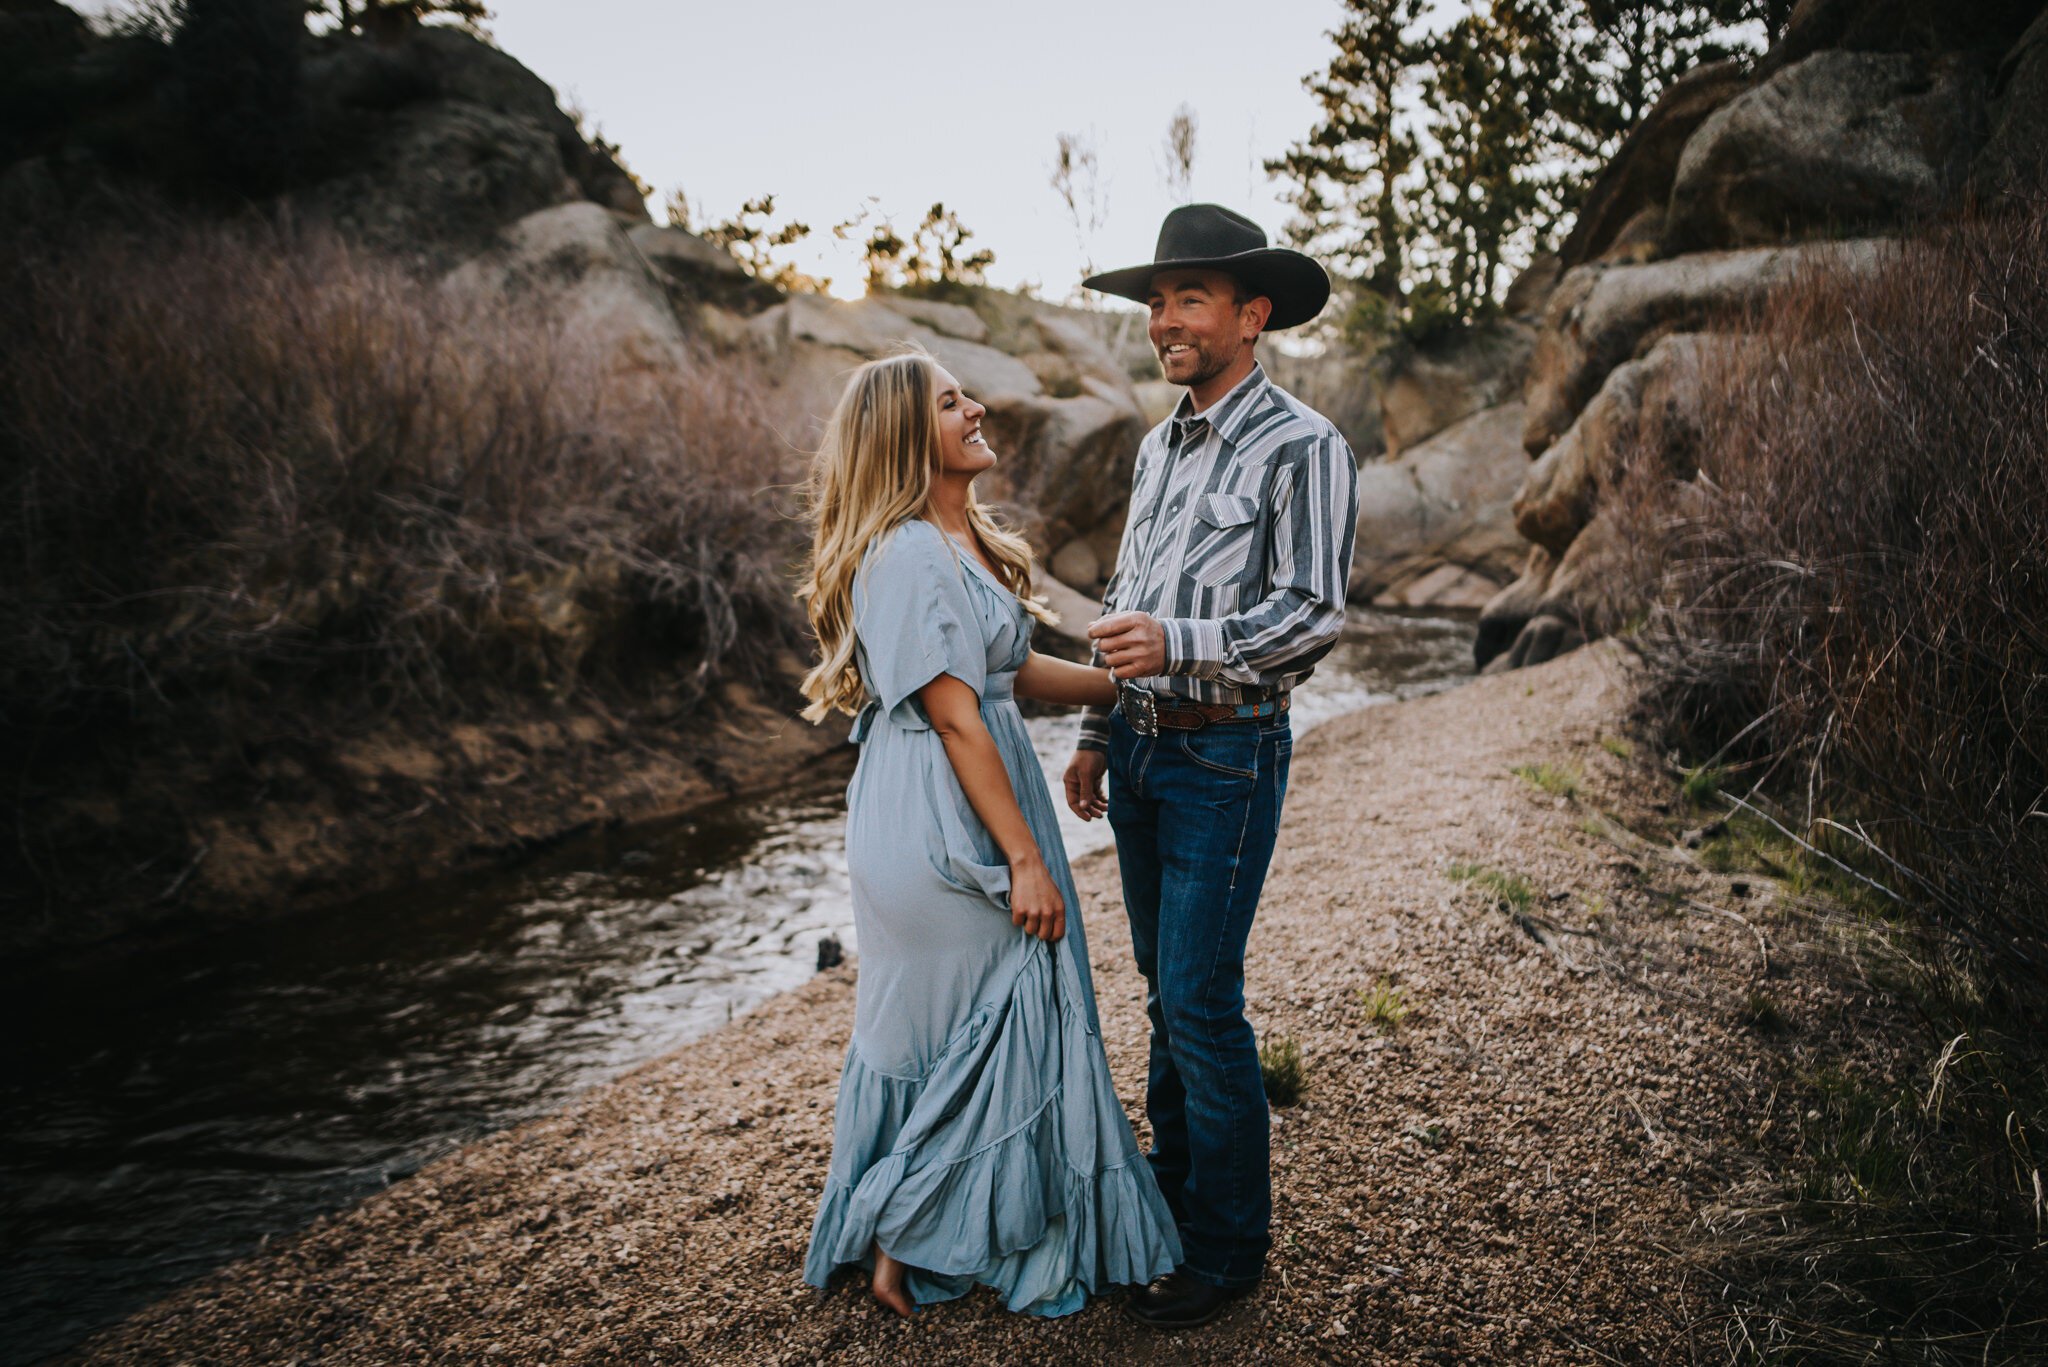 Shelby+and+Brady+Engagement+Session+Cheyenne+Wyoming+Sunset+Water+Fields+Rocks+Nature+Colorado+Photographer+Wild+Prairie+Photography-10-2020.jpeg